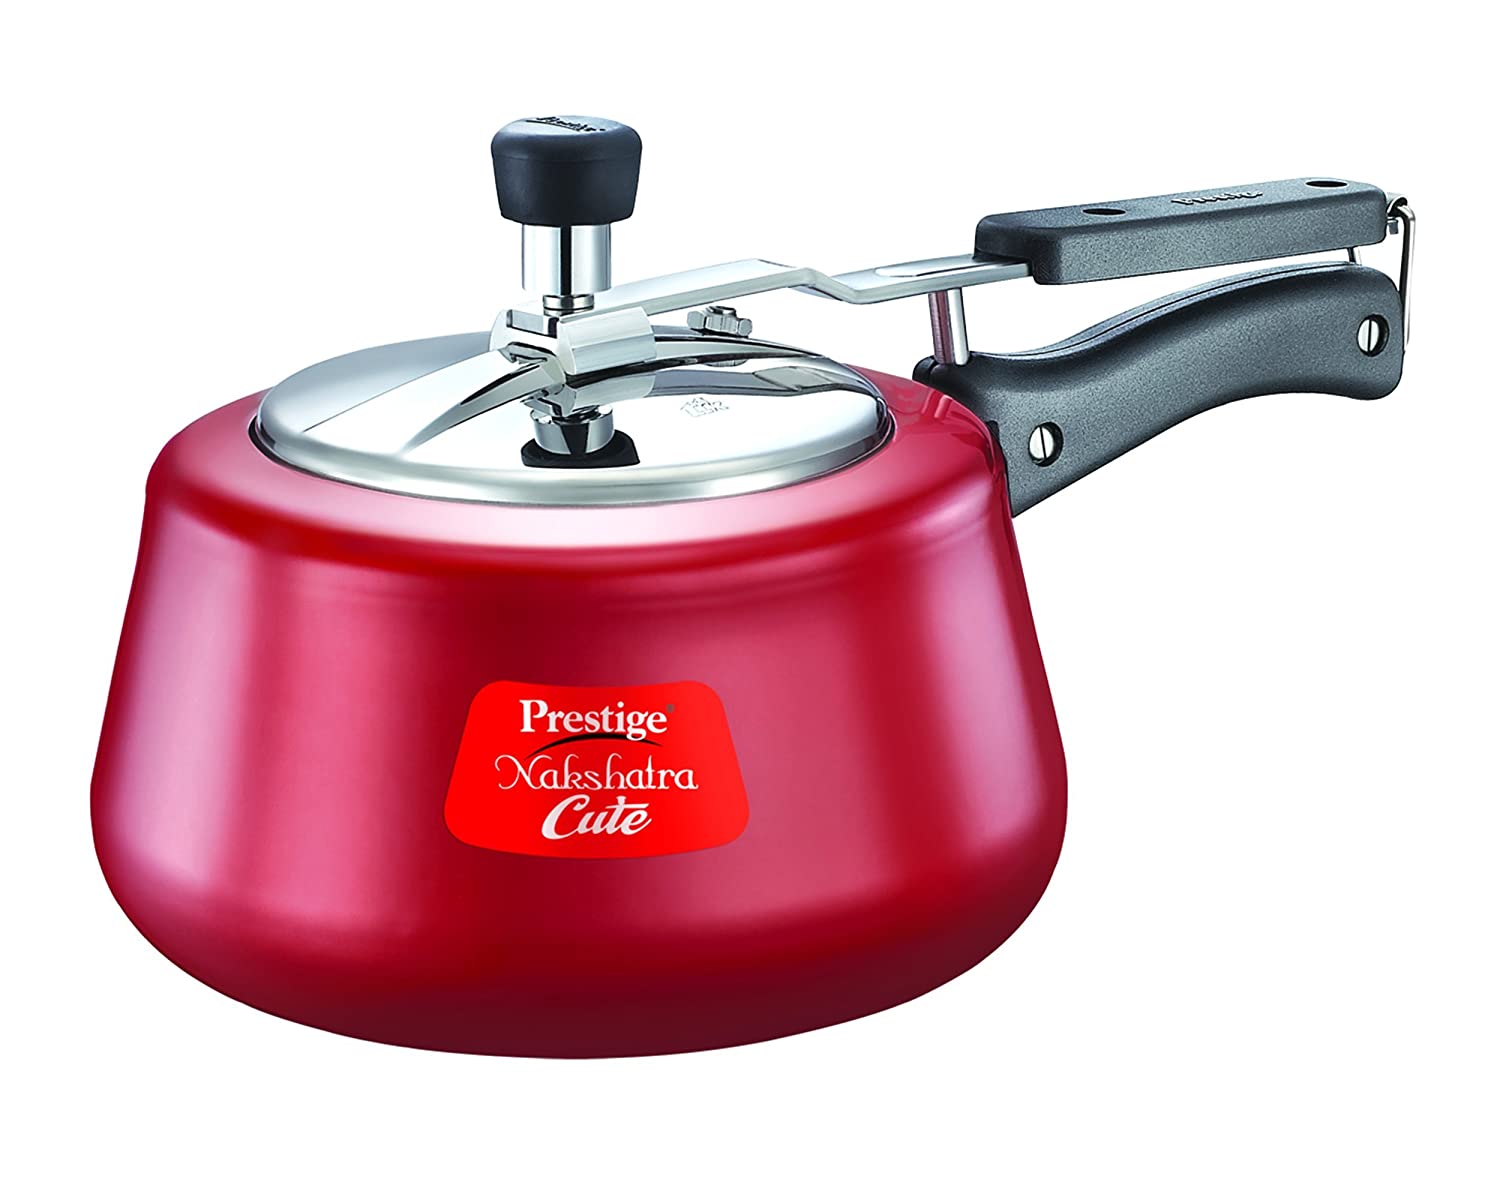 Prestige Nakshtra Cute Pressure cooker 3 Litre